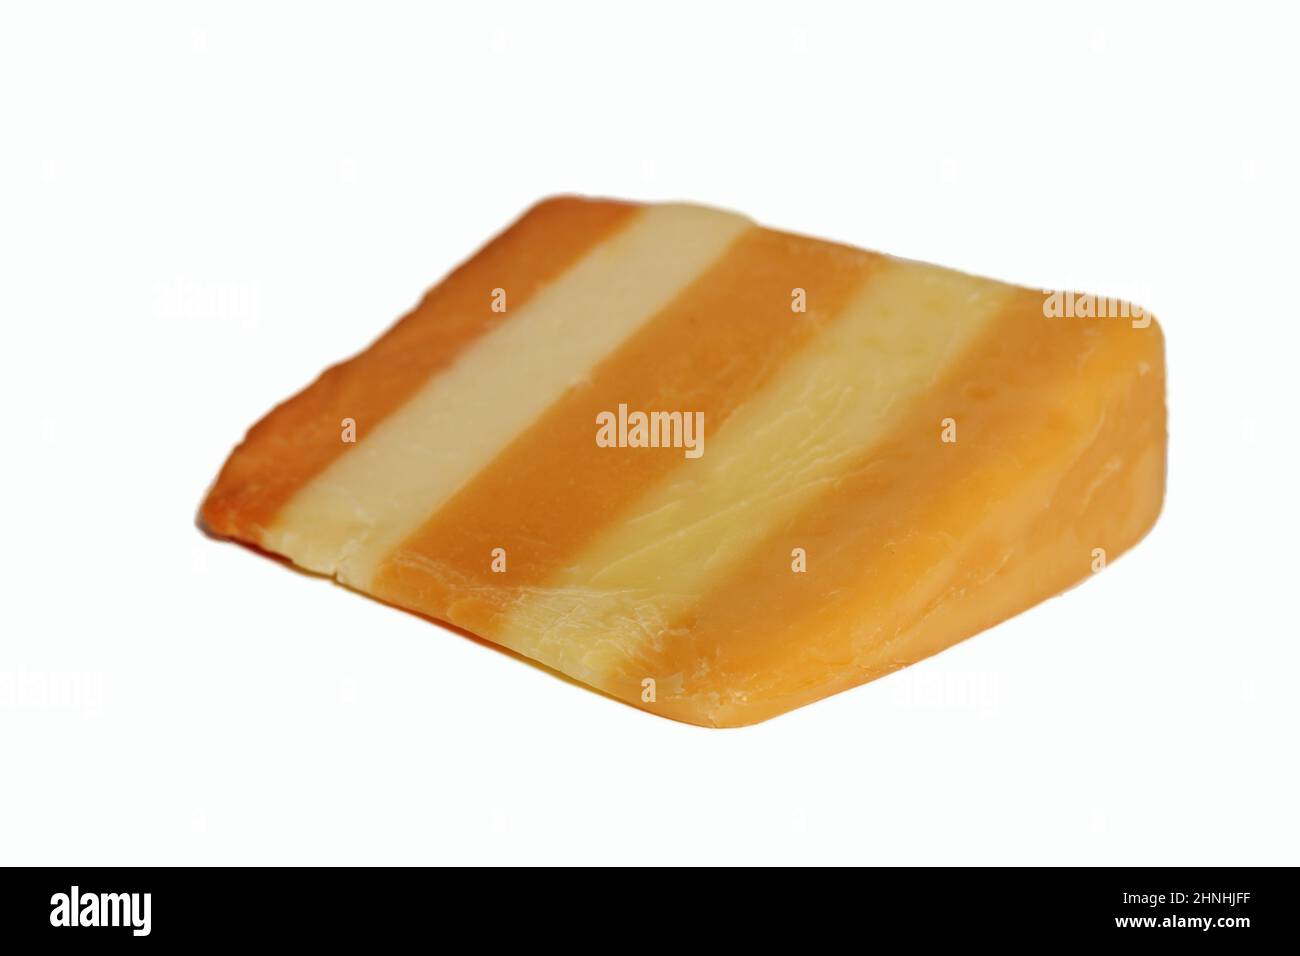 5 Layered English Cheese Shire Cheese on White Background Stock Photo